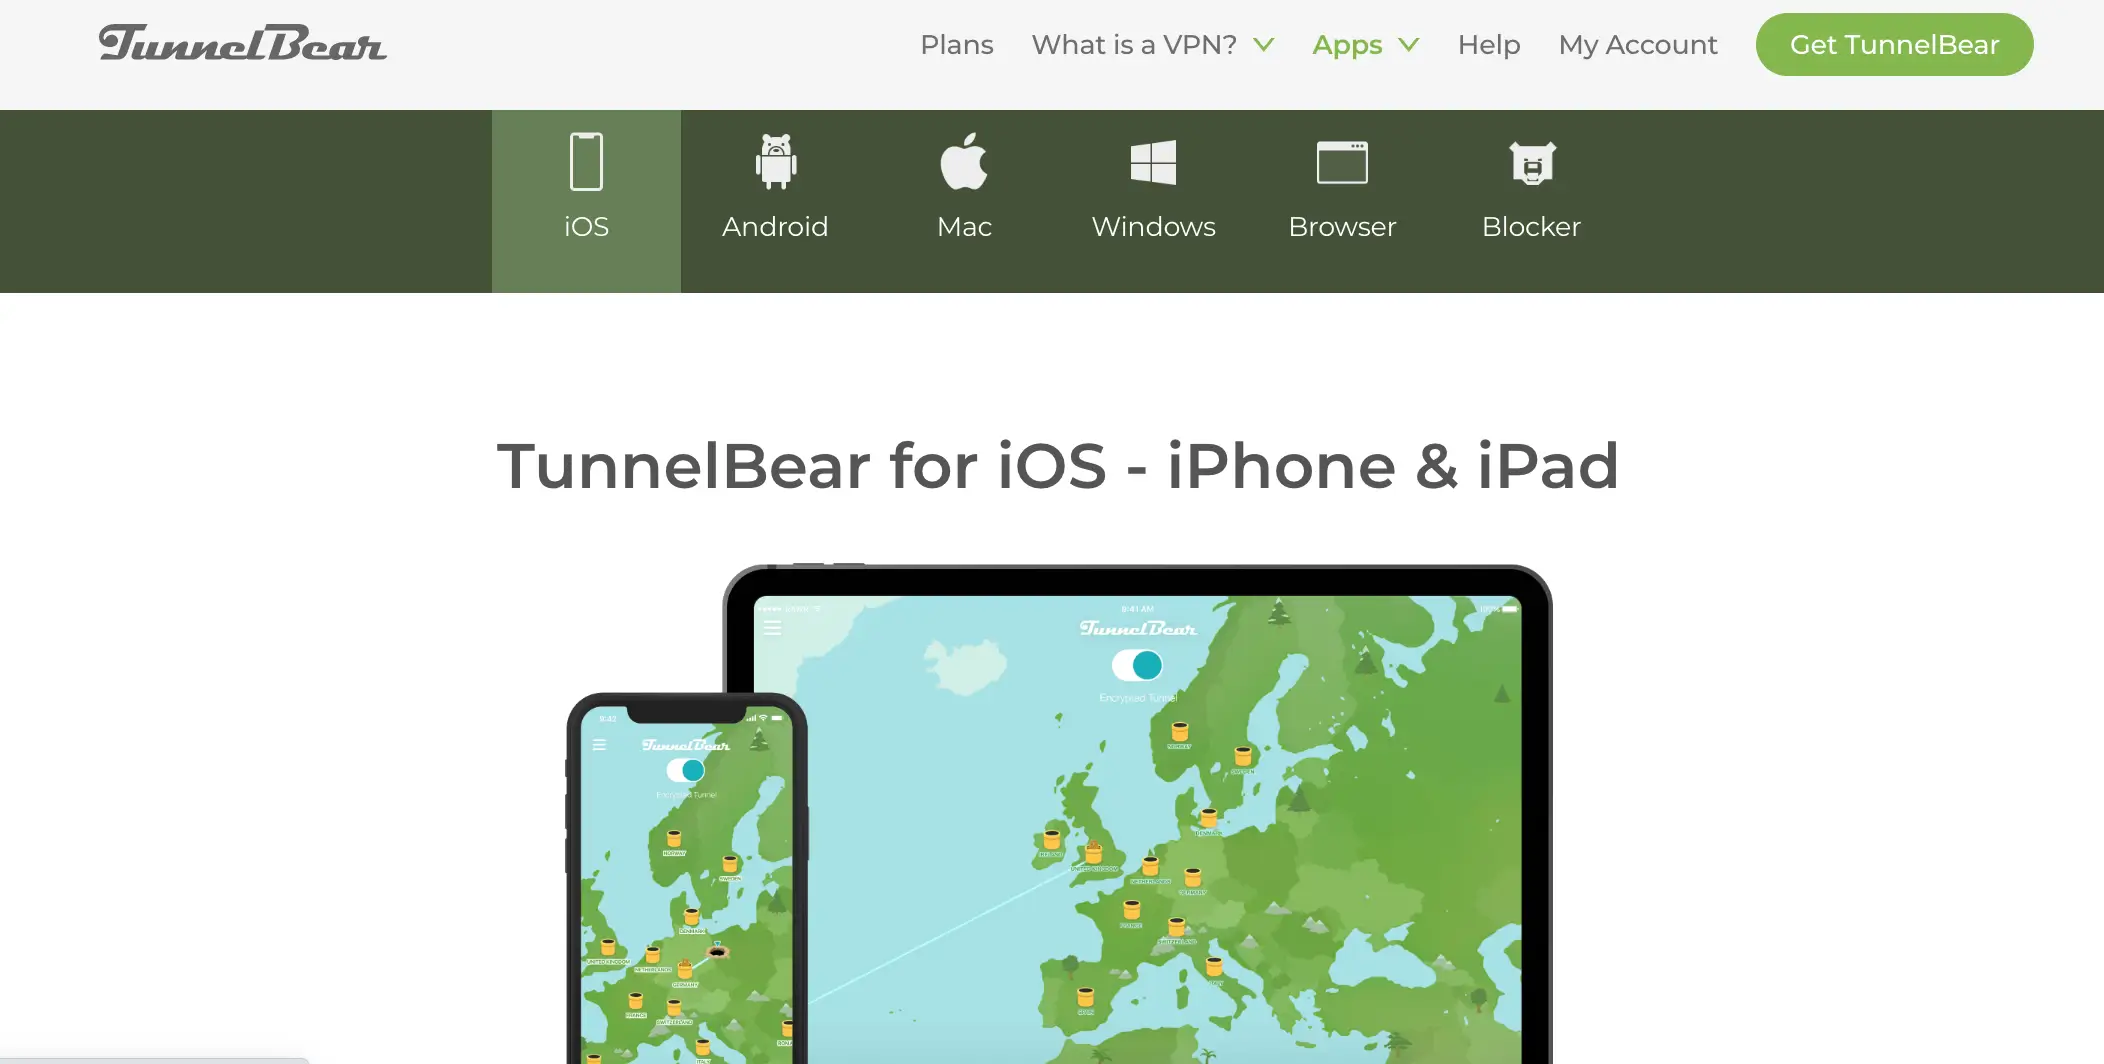 Best VPNs for iPhone: TunnelBear